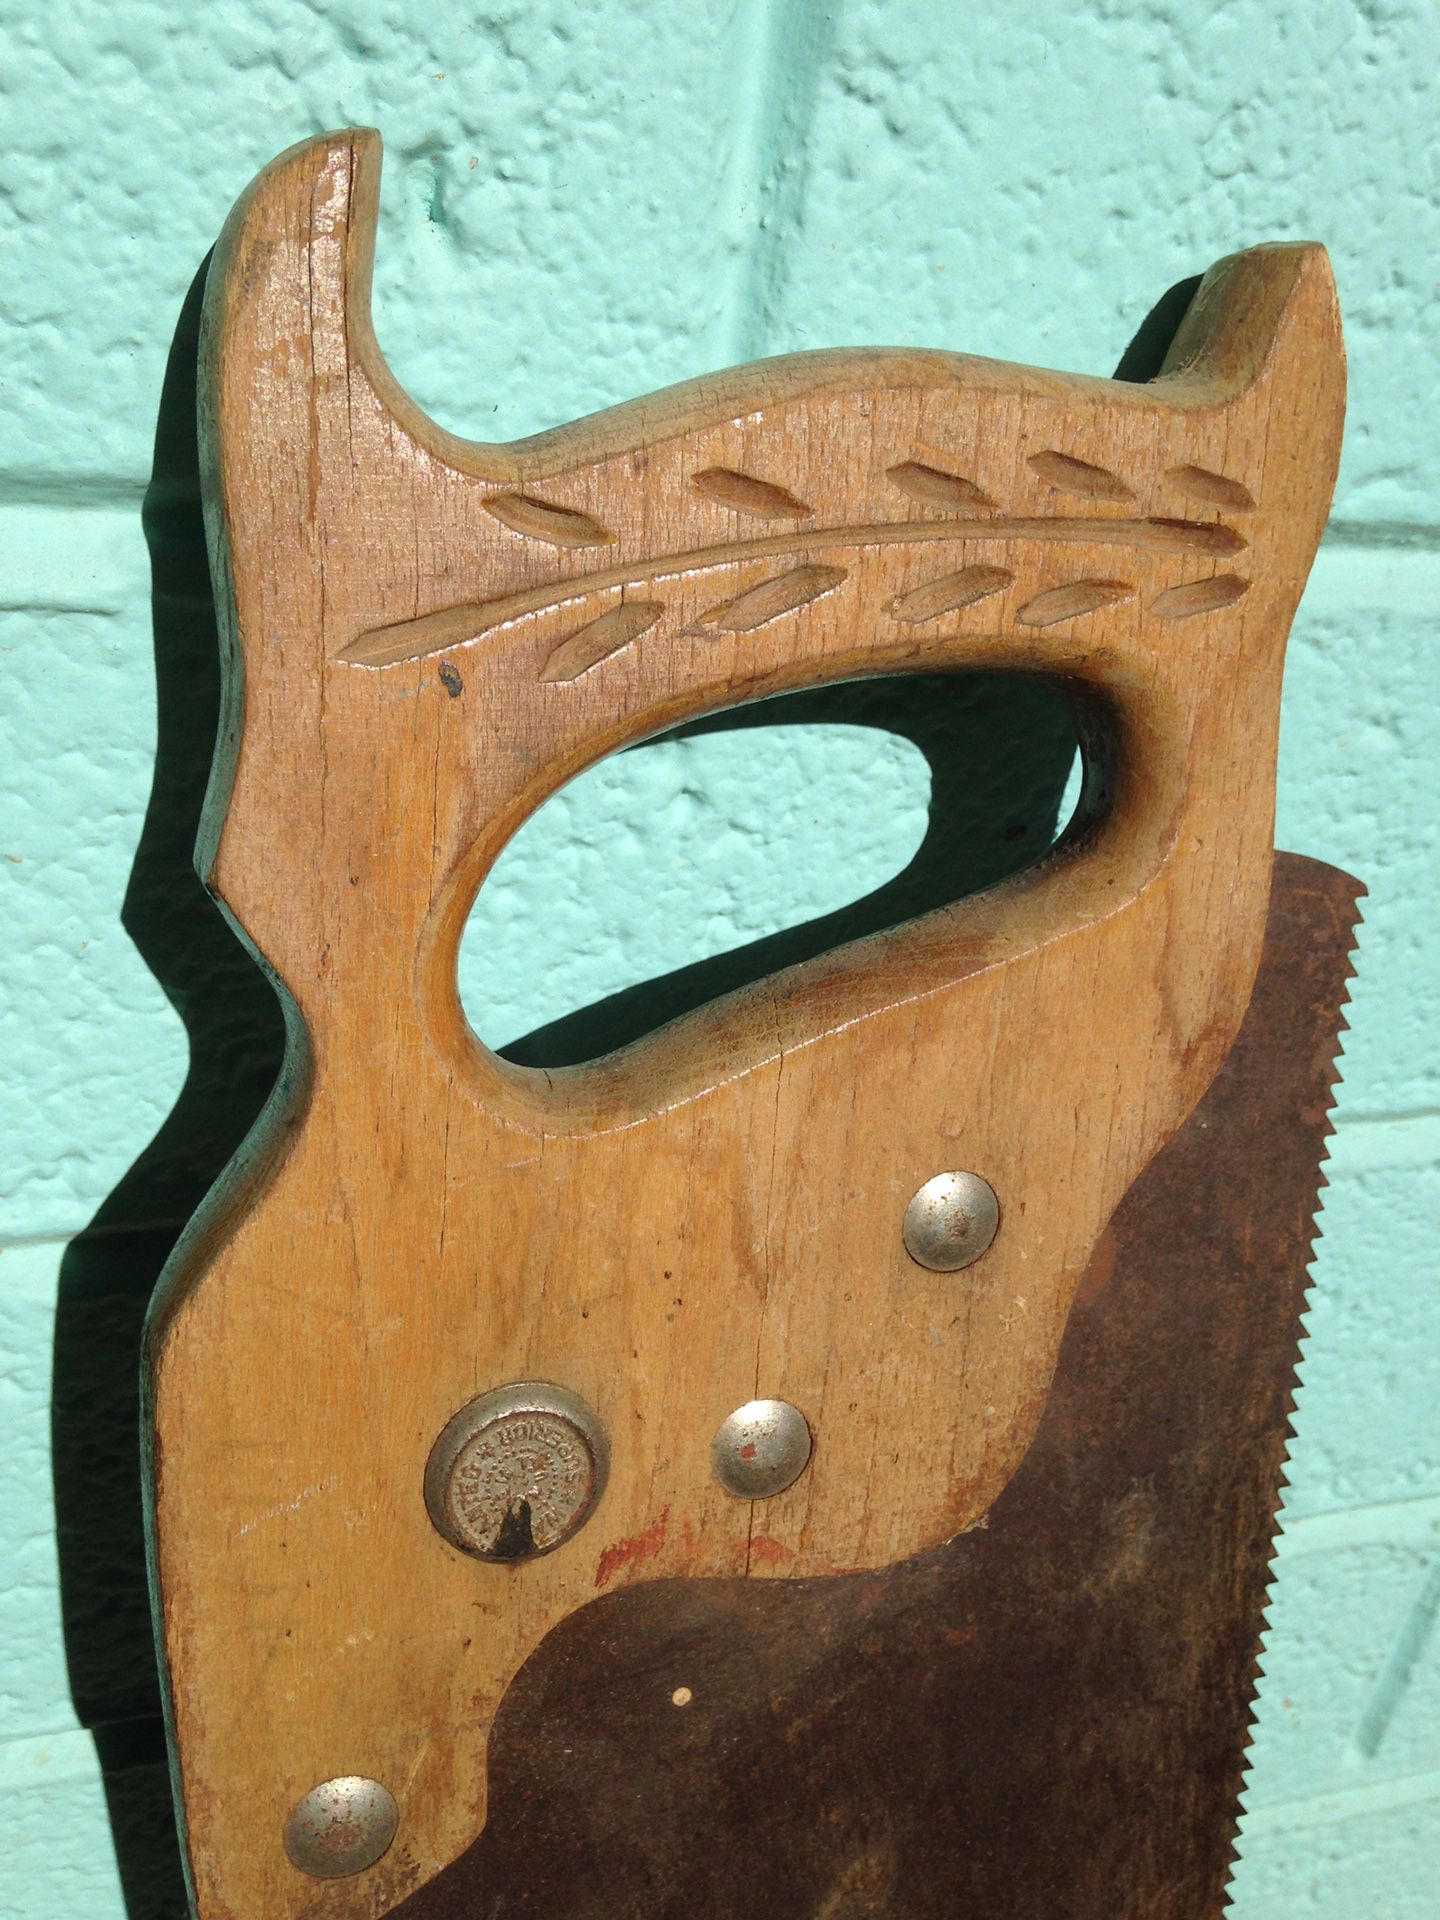 Antique crosscut saw - $8 OBO